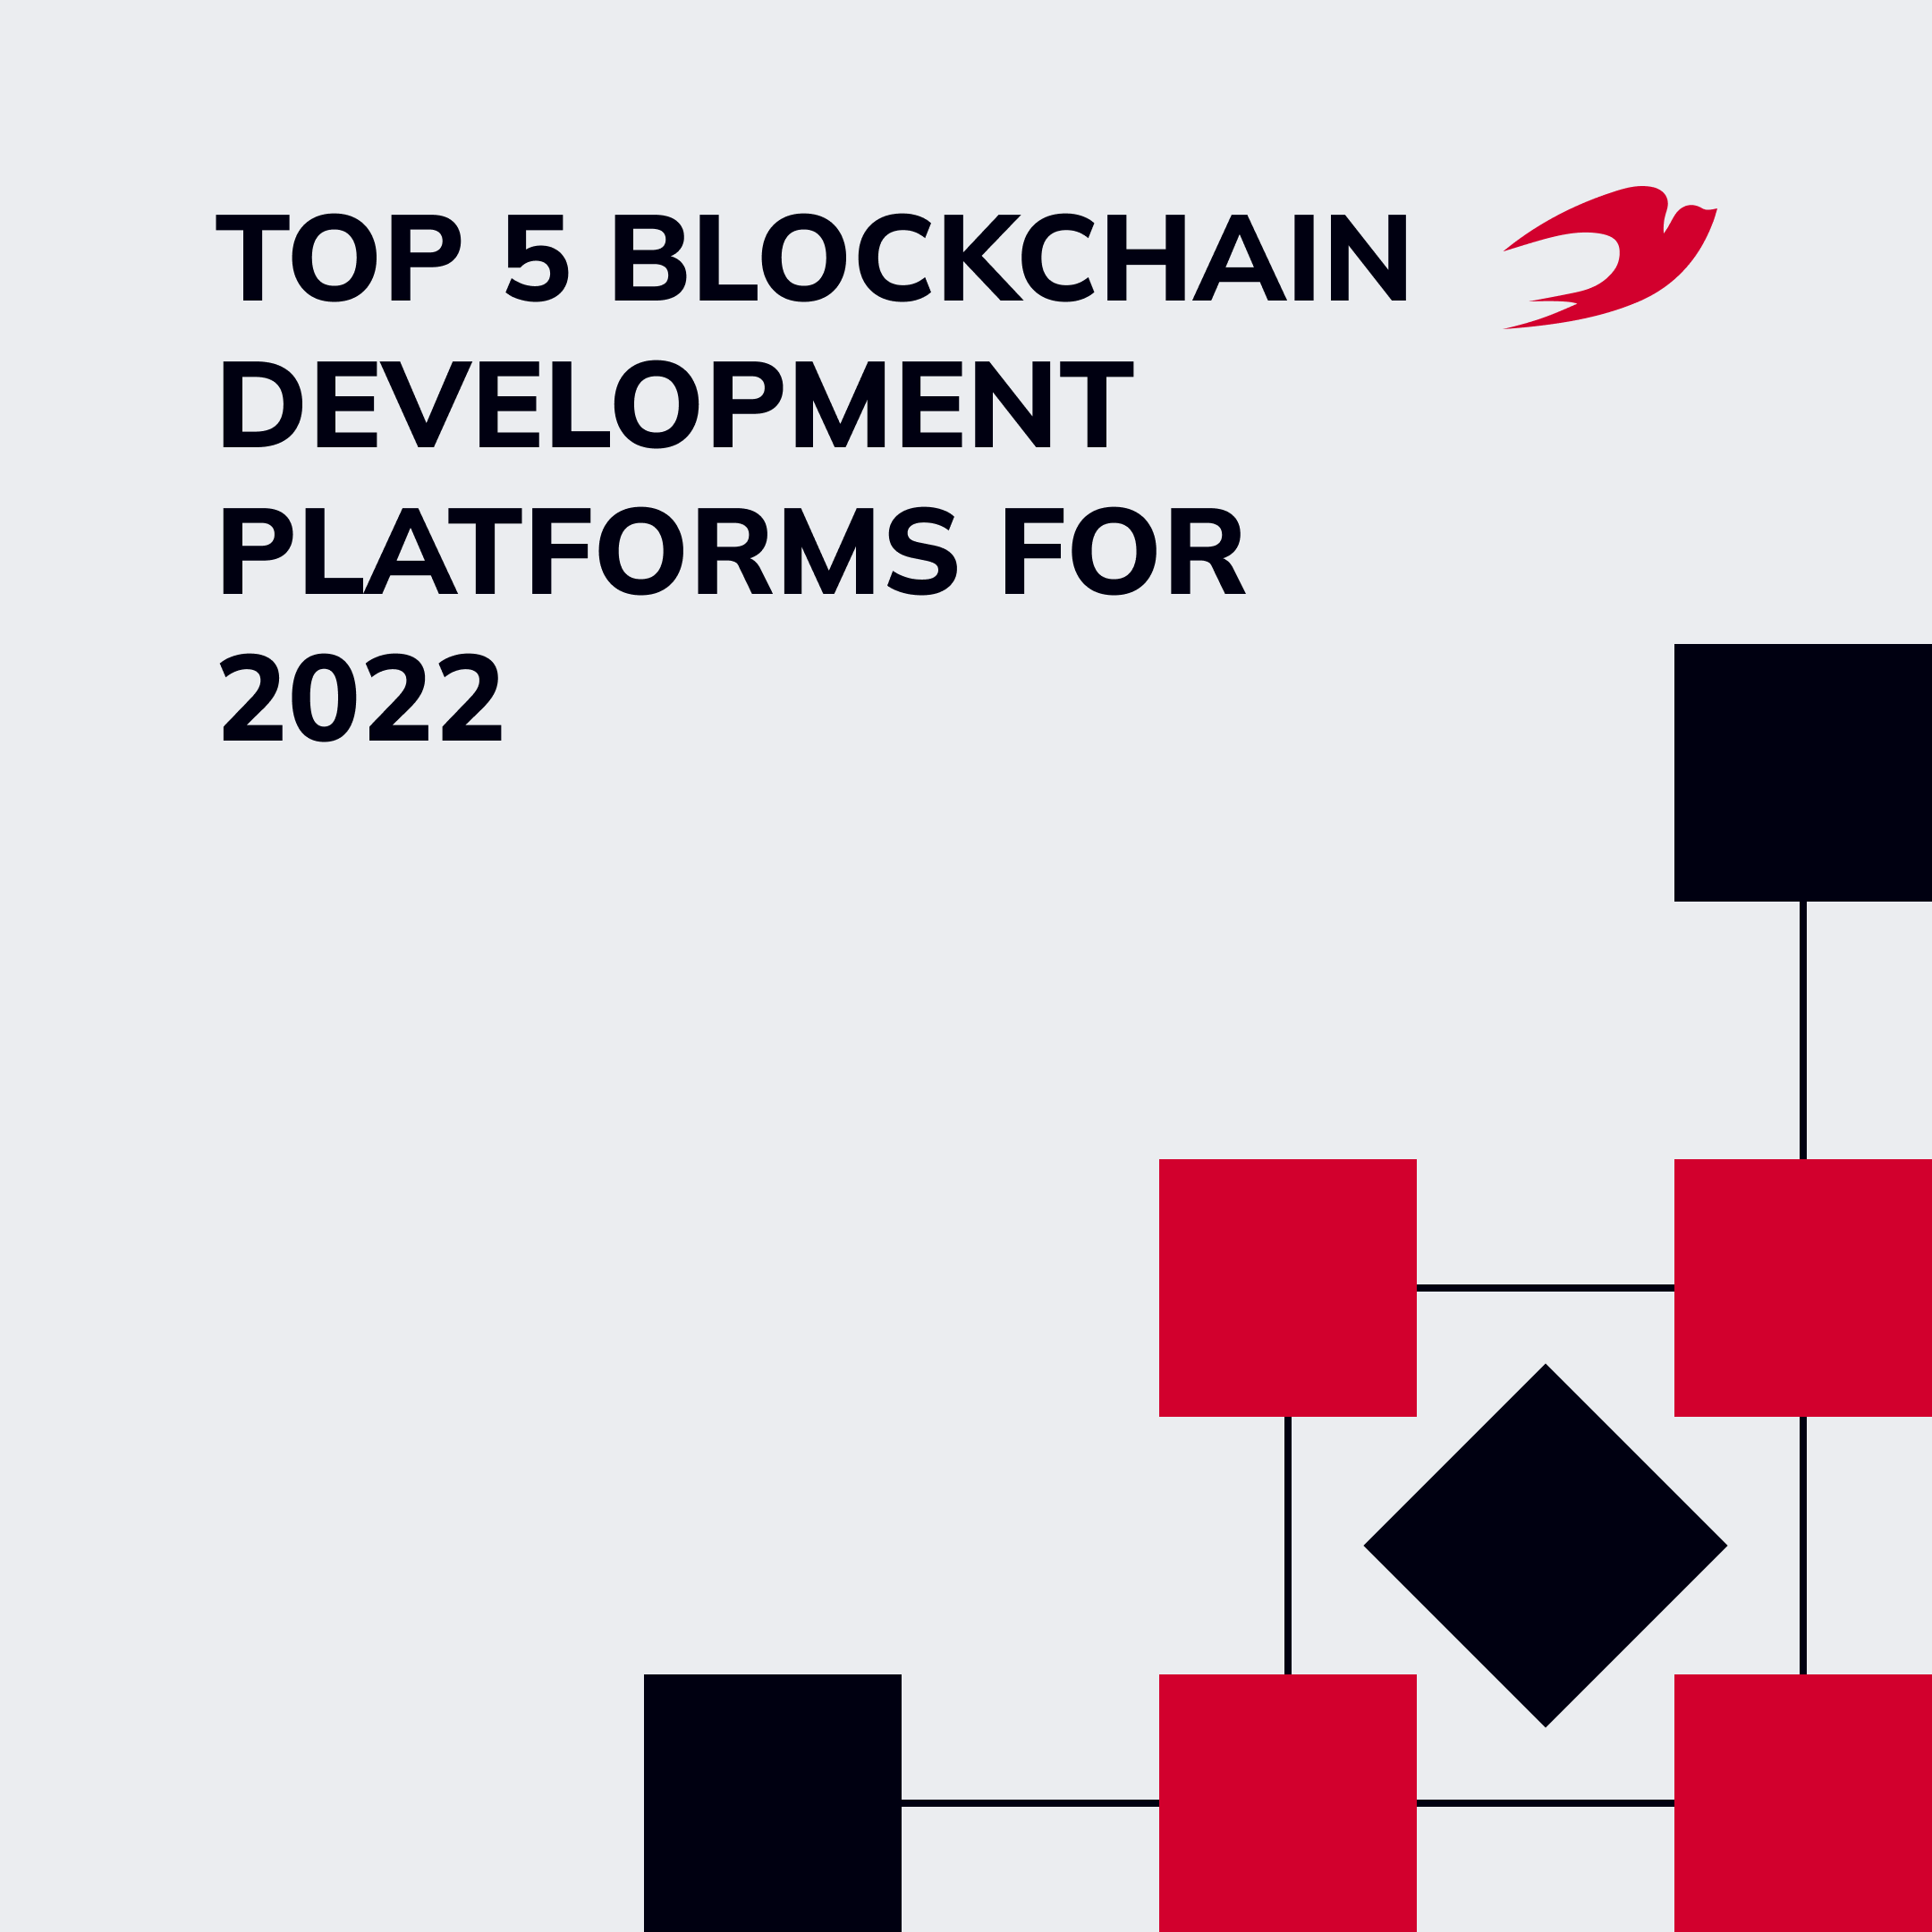 Top 5 Blockchain Development Platforms for 2022